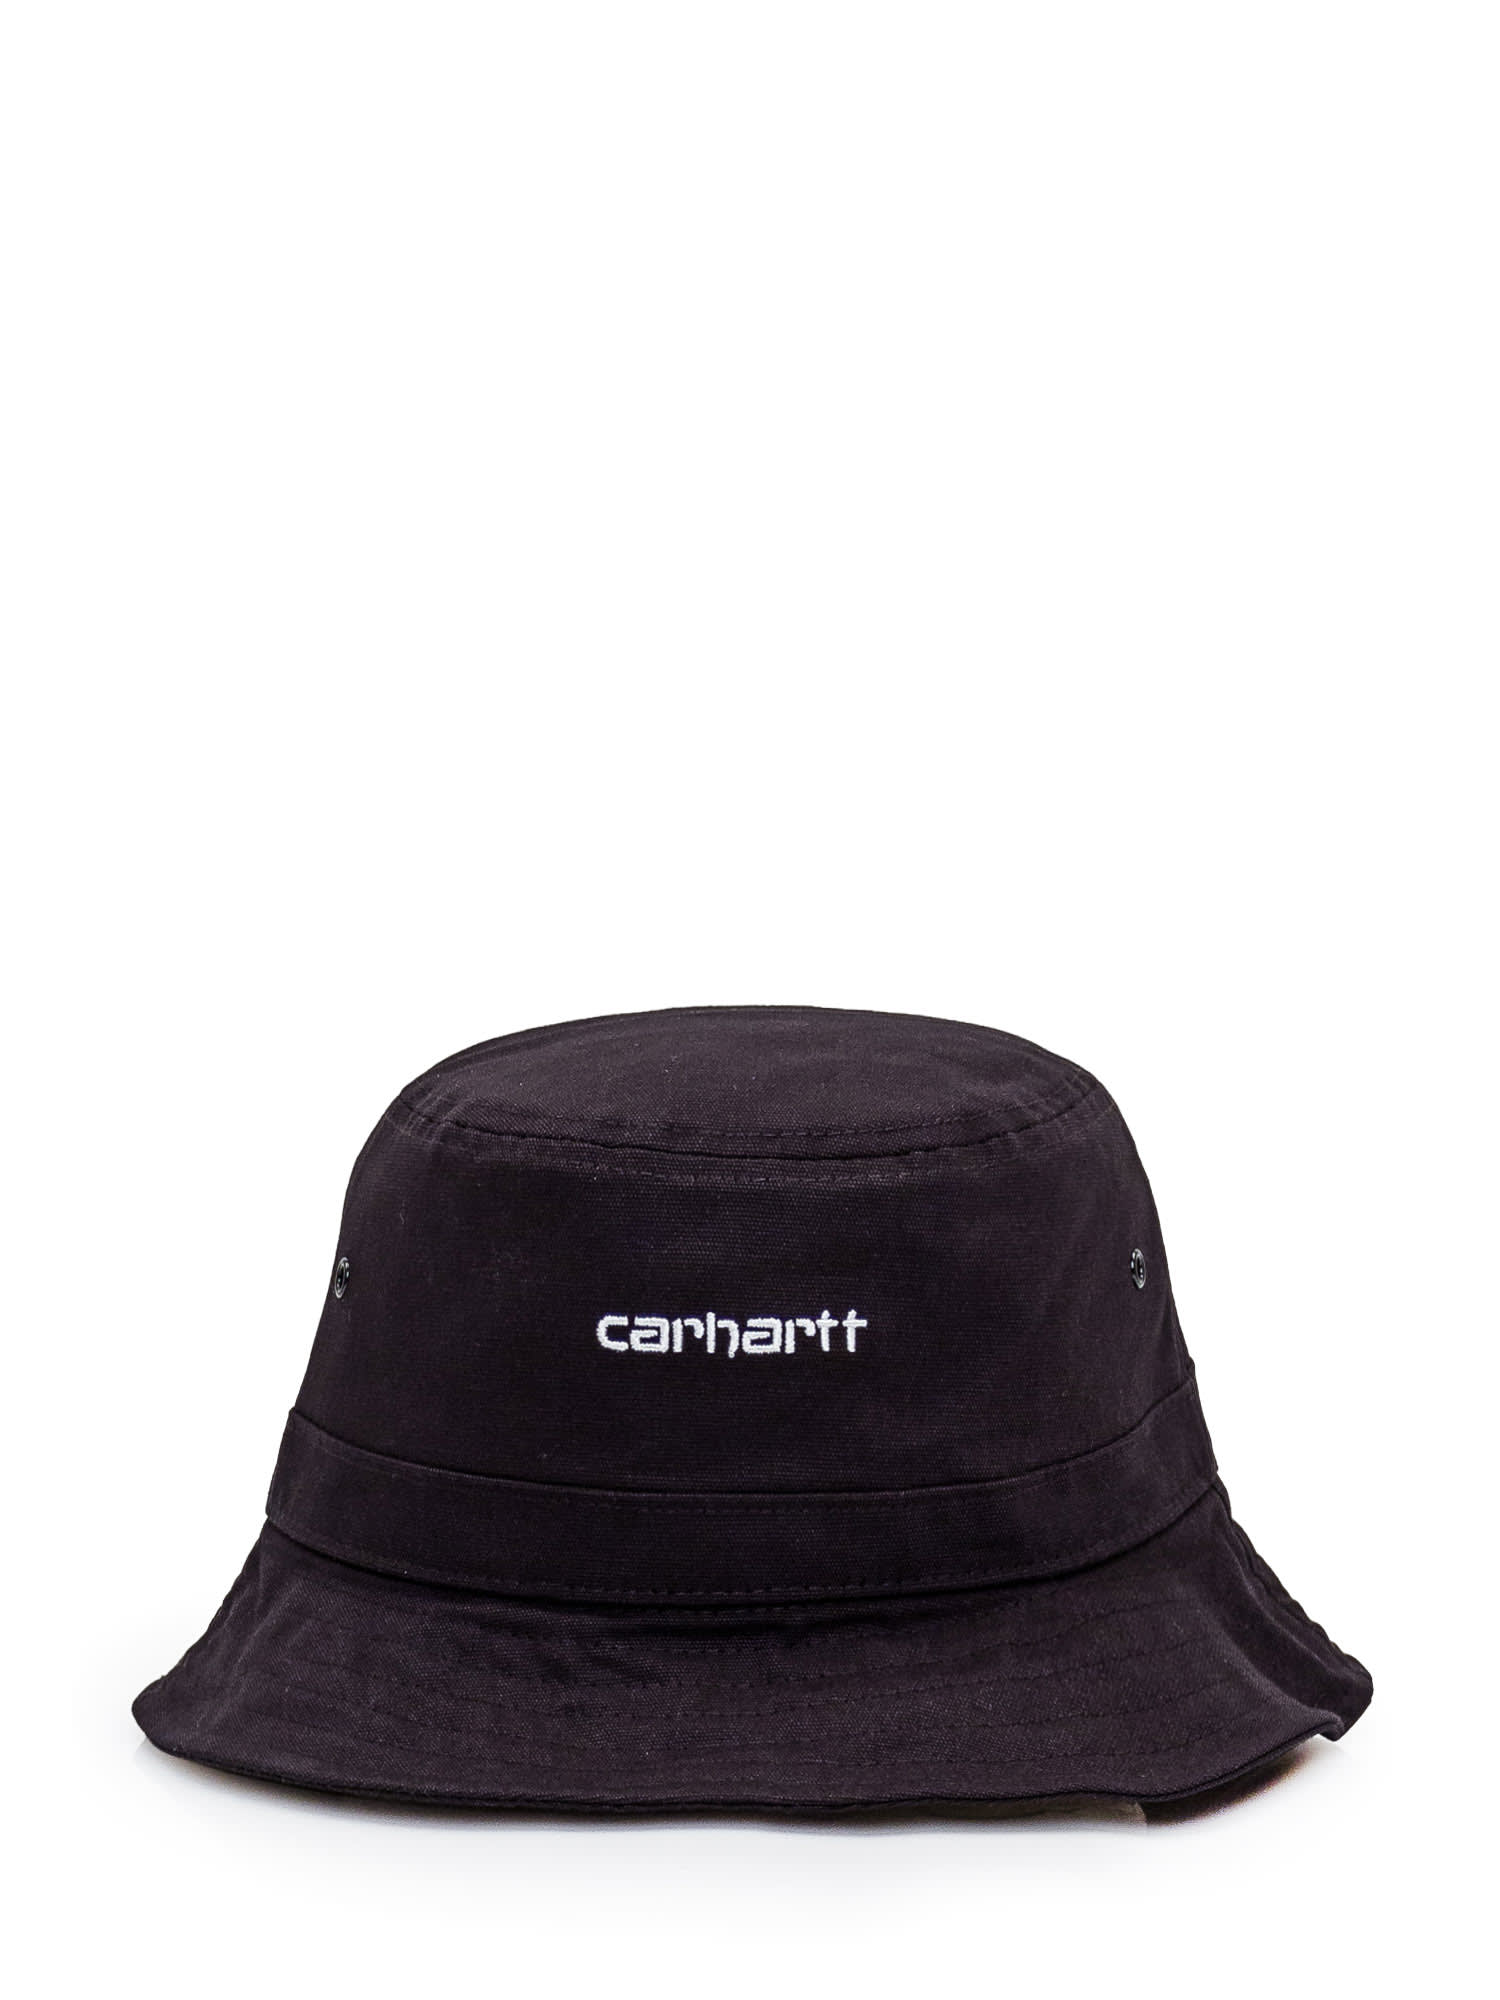 Carhartt Bucket Hat In Black/white